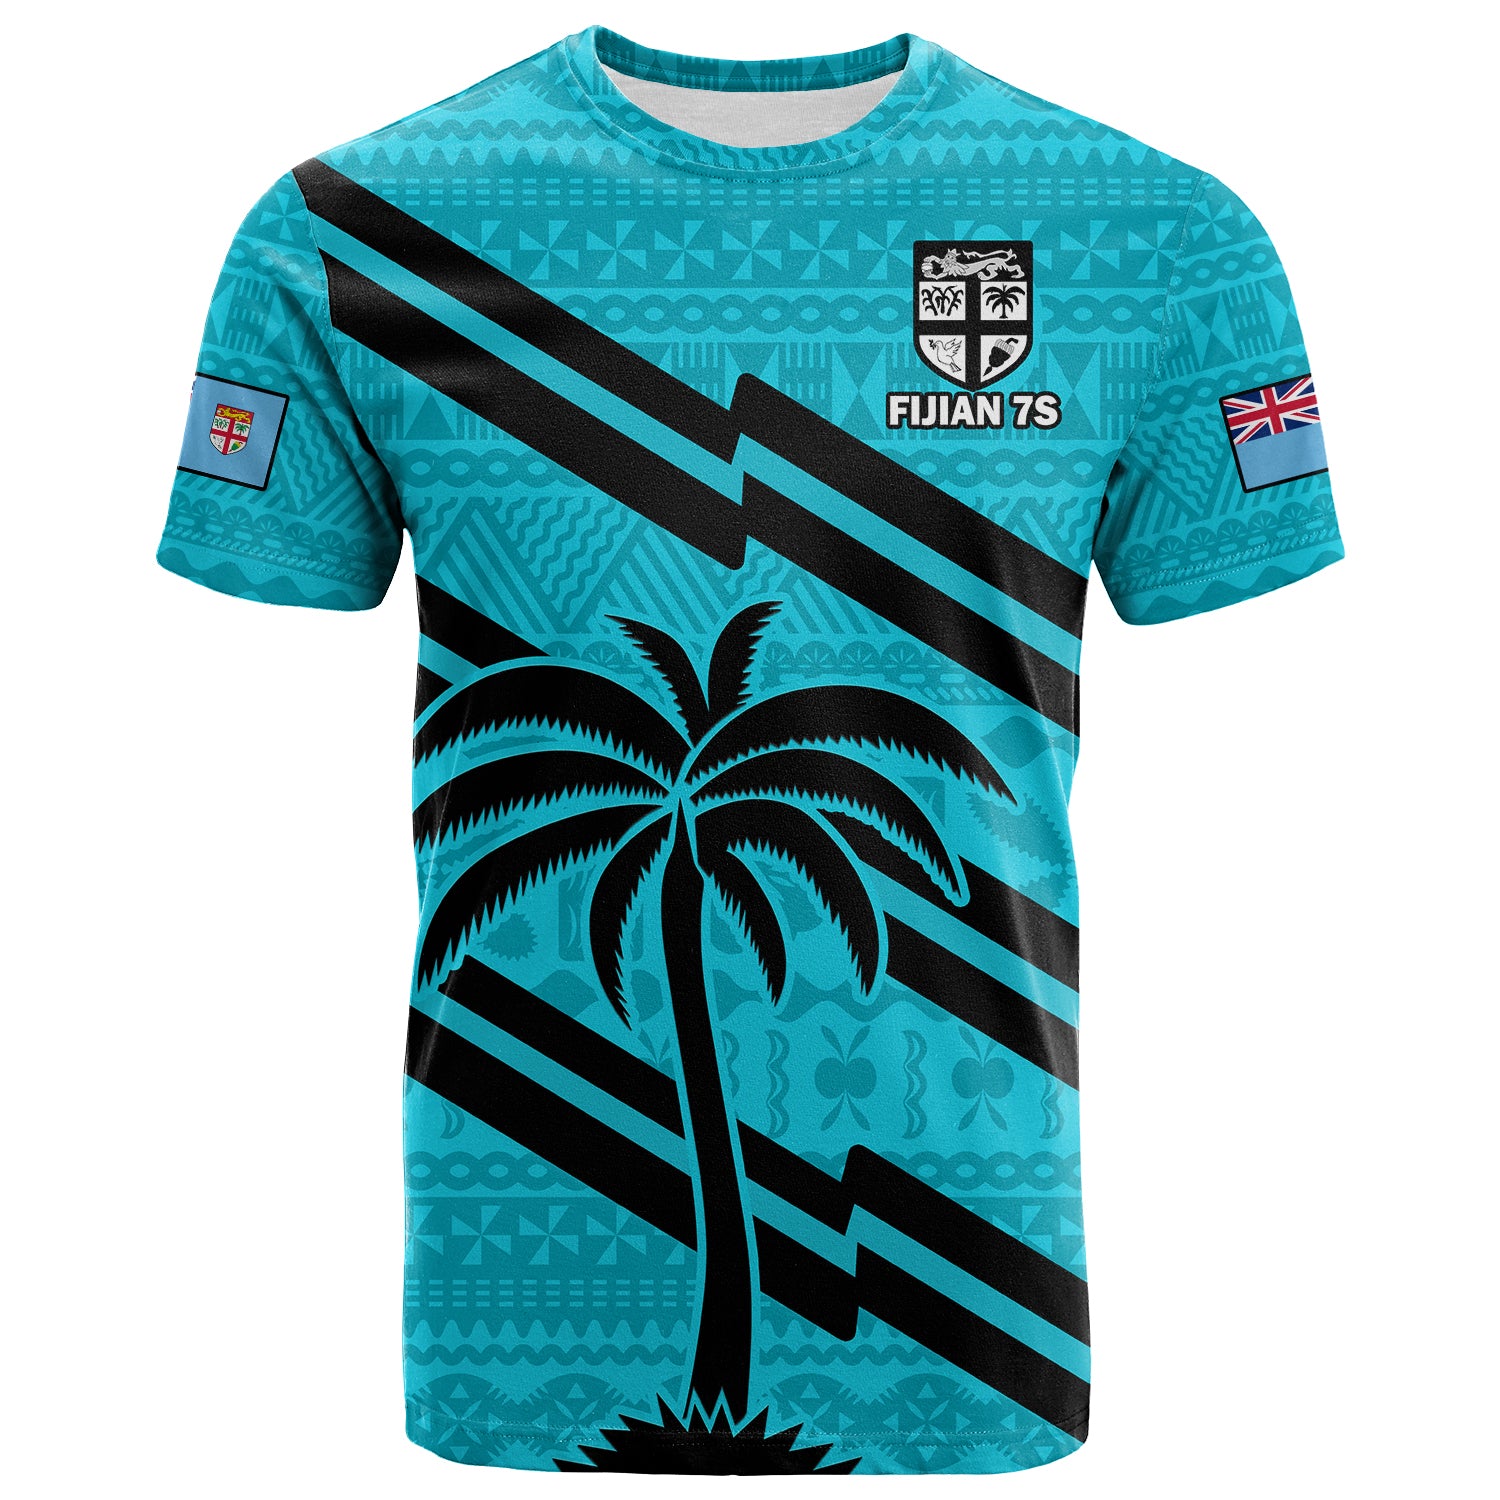 (Custom Text and Number) Fiji Rugby Tapa Pattern Fijian 7s Cyan T Shirt LT14 Cyan - Polynesian Pride